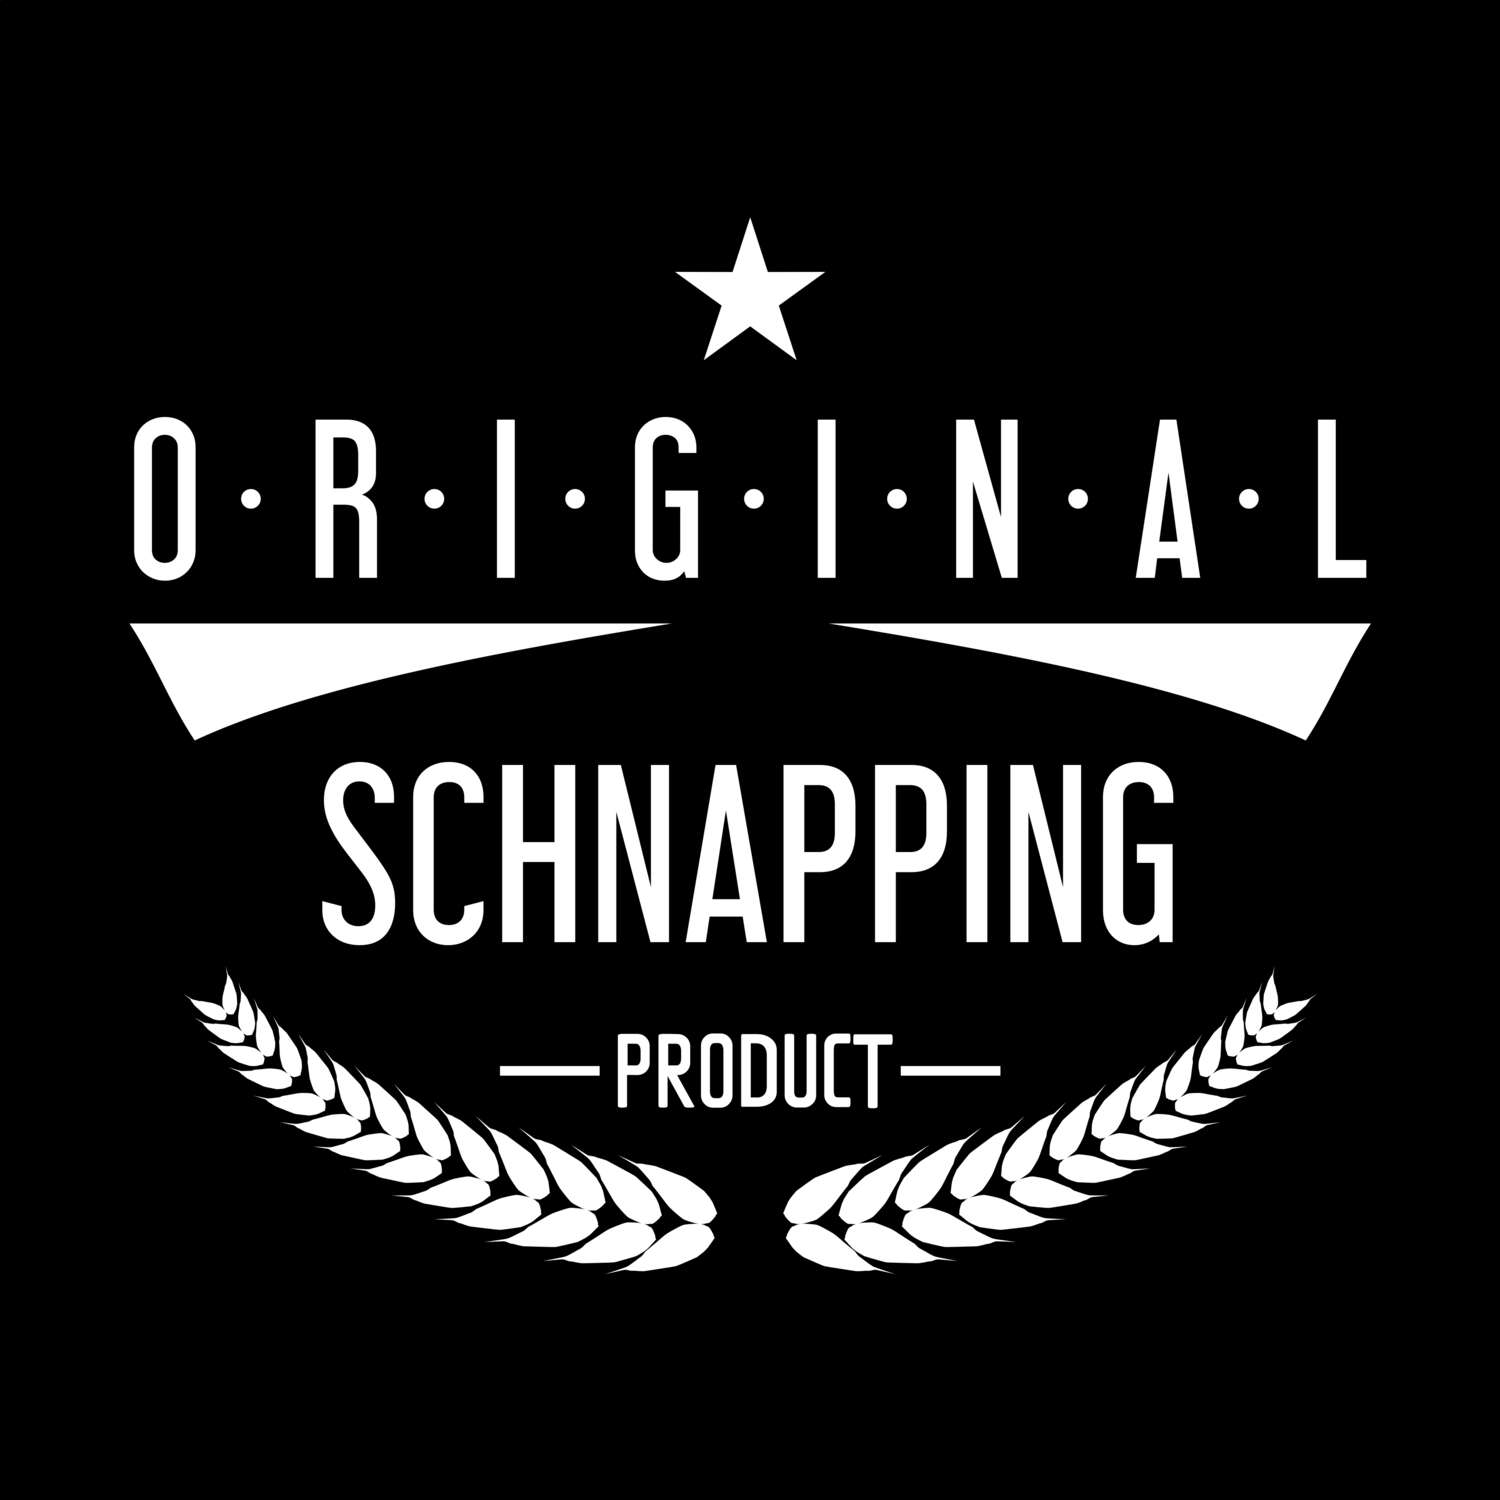 Schnapping T-Shirt »Original Product«